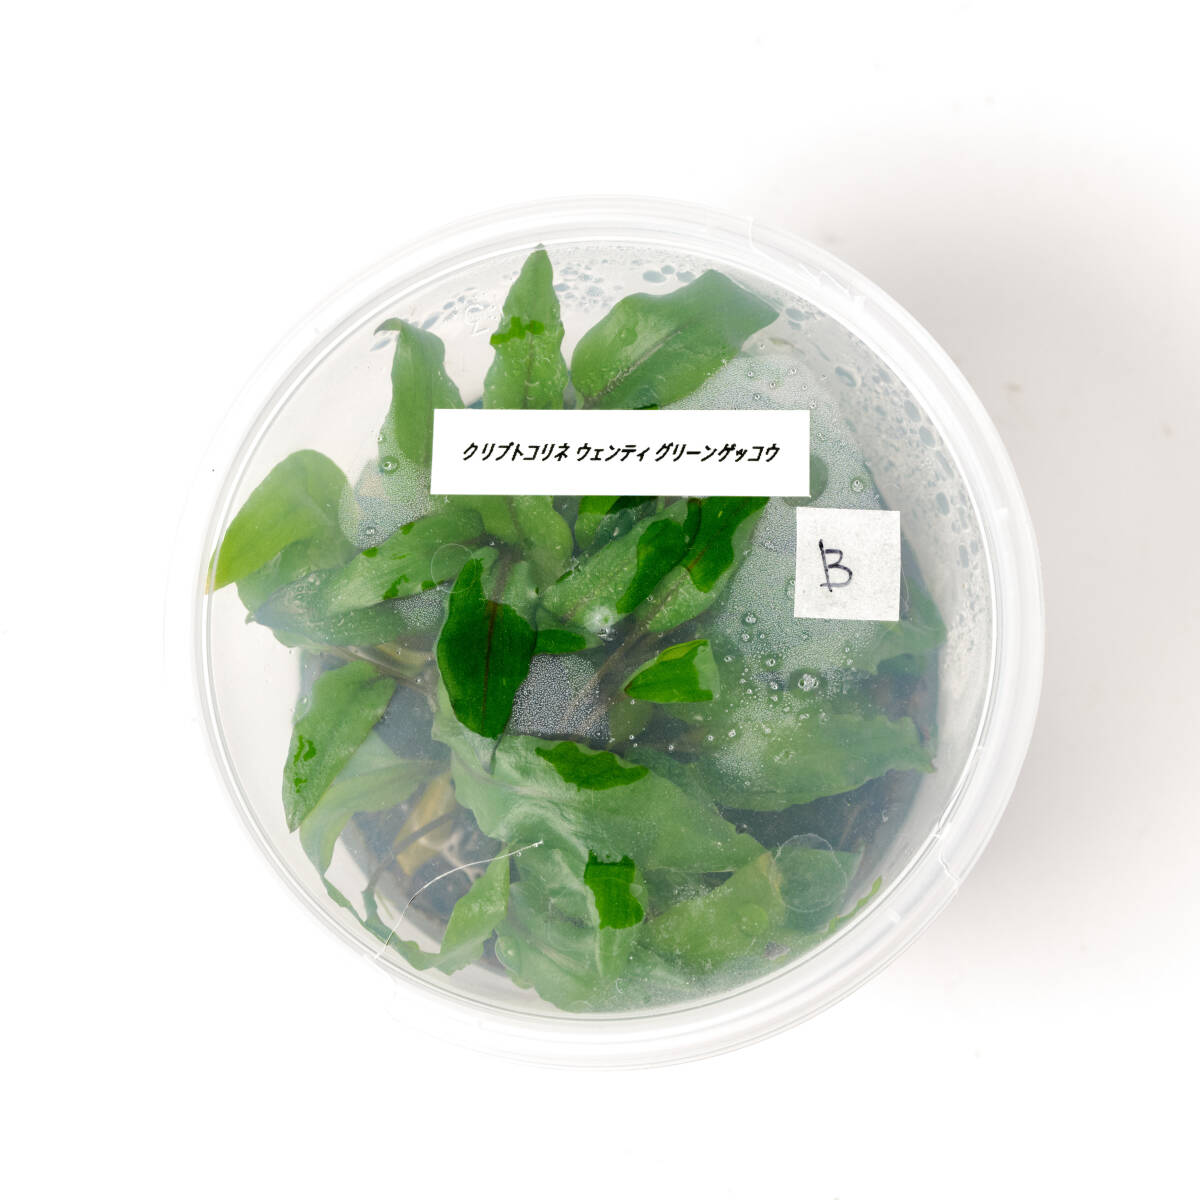 [ water plants ] Cryptocoryne wenti green geko- pictured 1 cup ( control symbol :B)